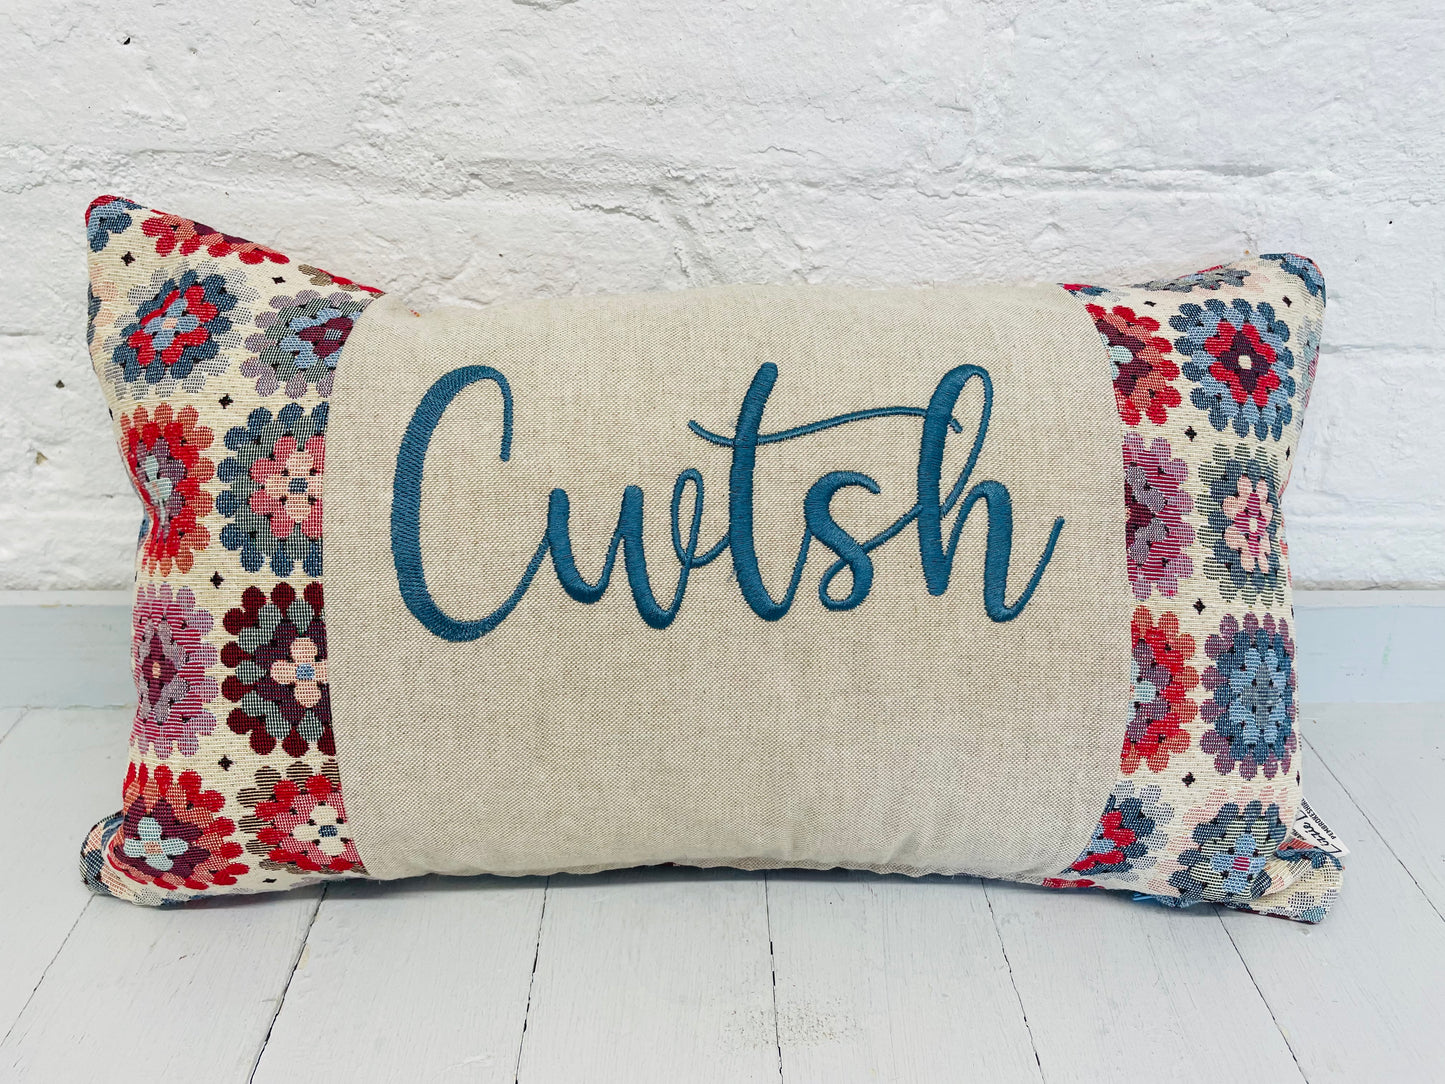 Crochet style Cwtsh Cushion-Long Cwtsh Panel Cushion